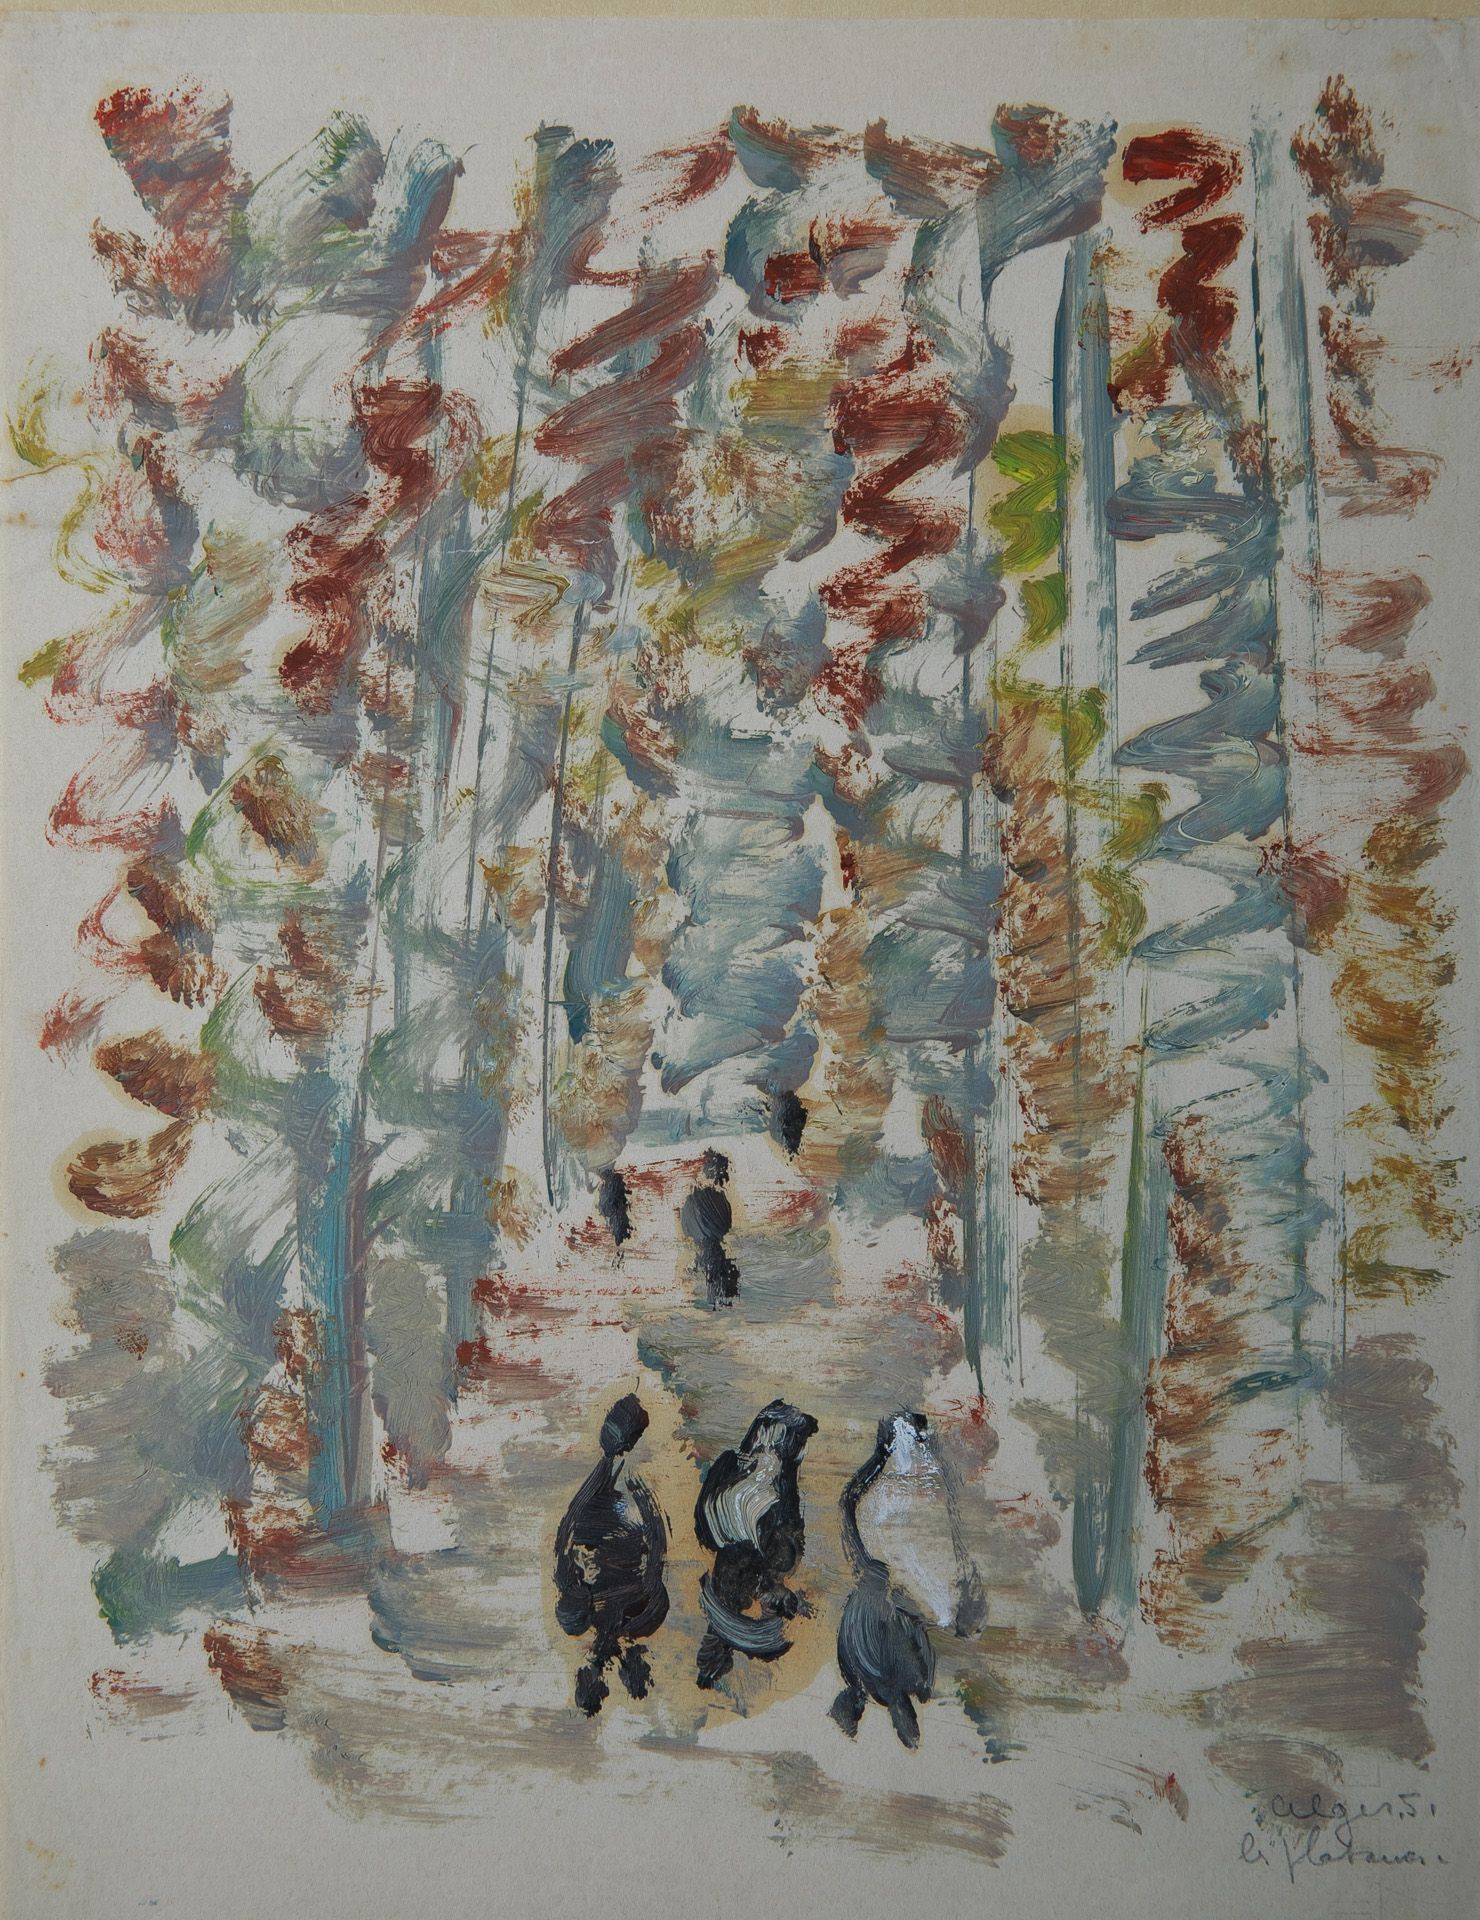 Null 皮埃尔-普鲁沃斯特 (1921- 2008)

托盘

纸上水粉画，17 x 21厘米，SBD和定位和日期1952年